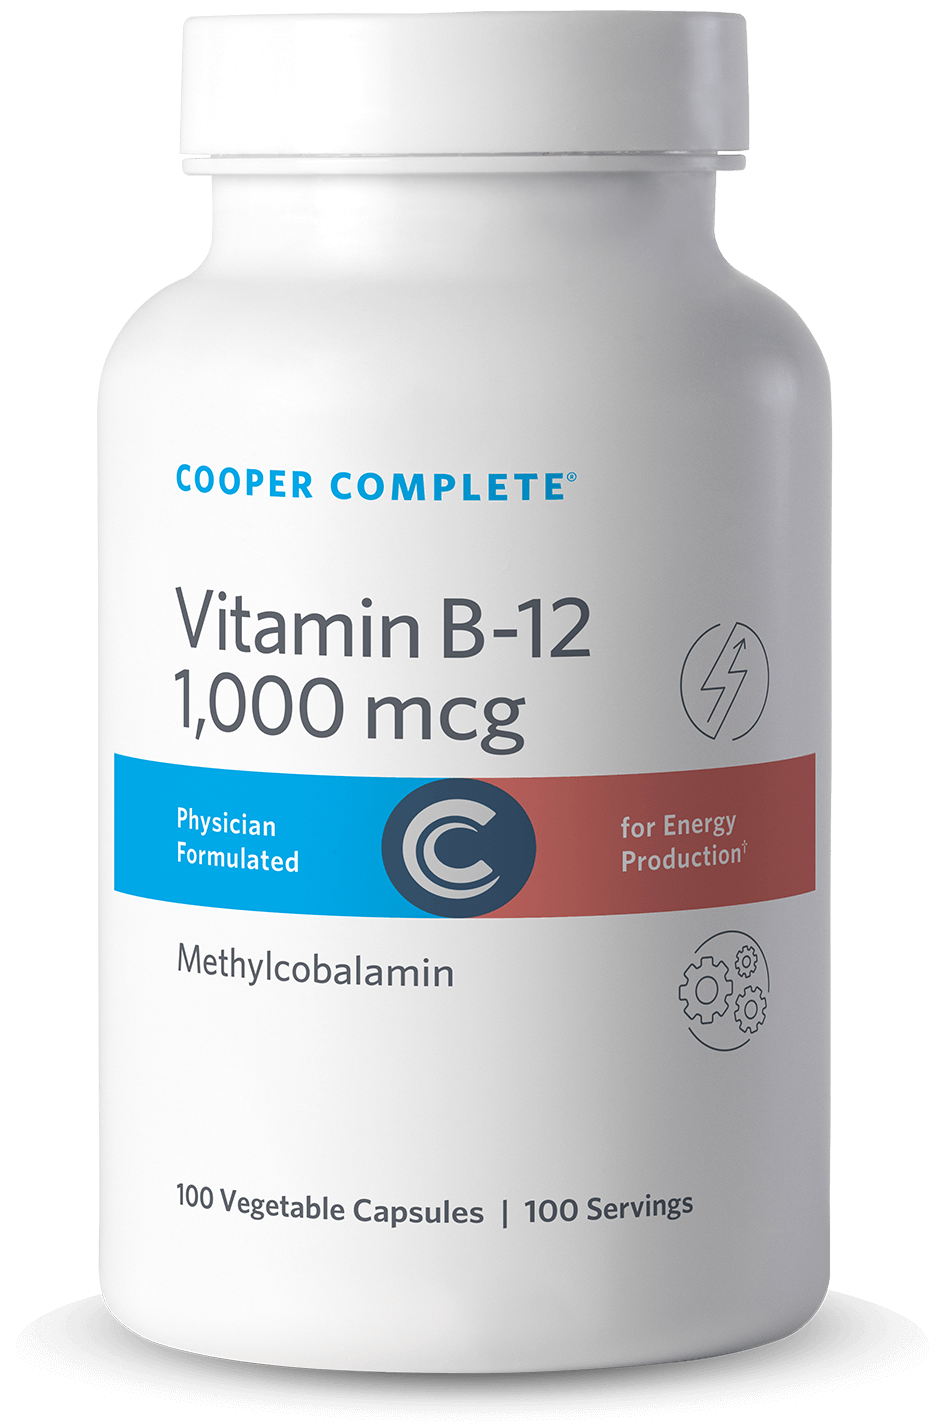 Bottle of Cooper Complete Vitamin B12 Methylcobalamin Supplement 1000 mcg vegetarian capsules